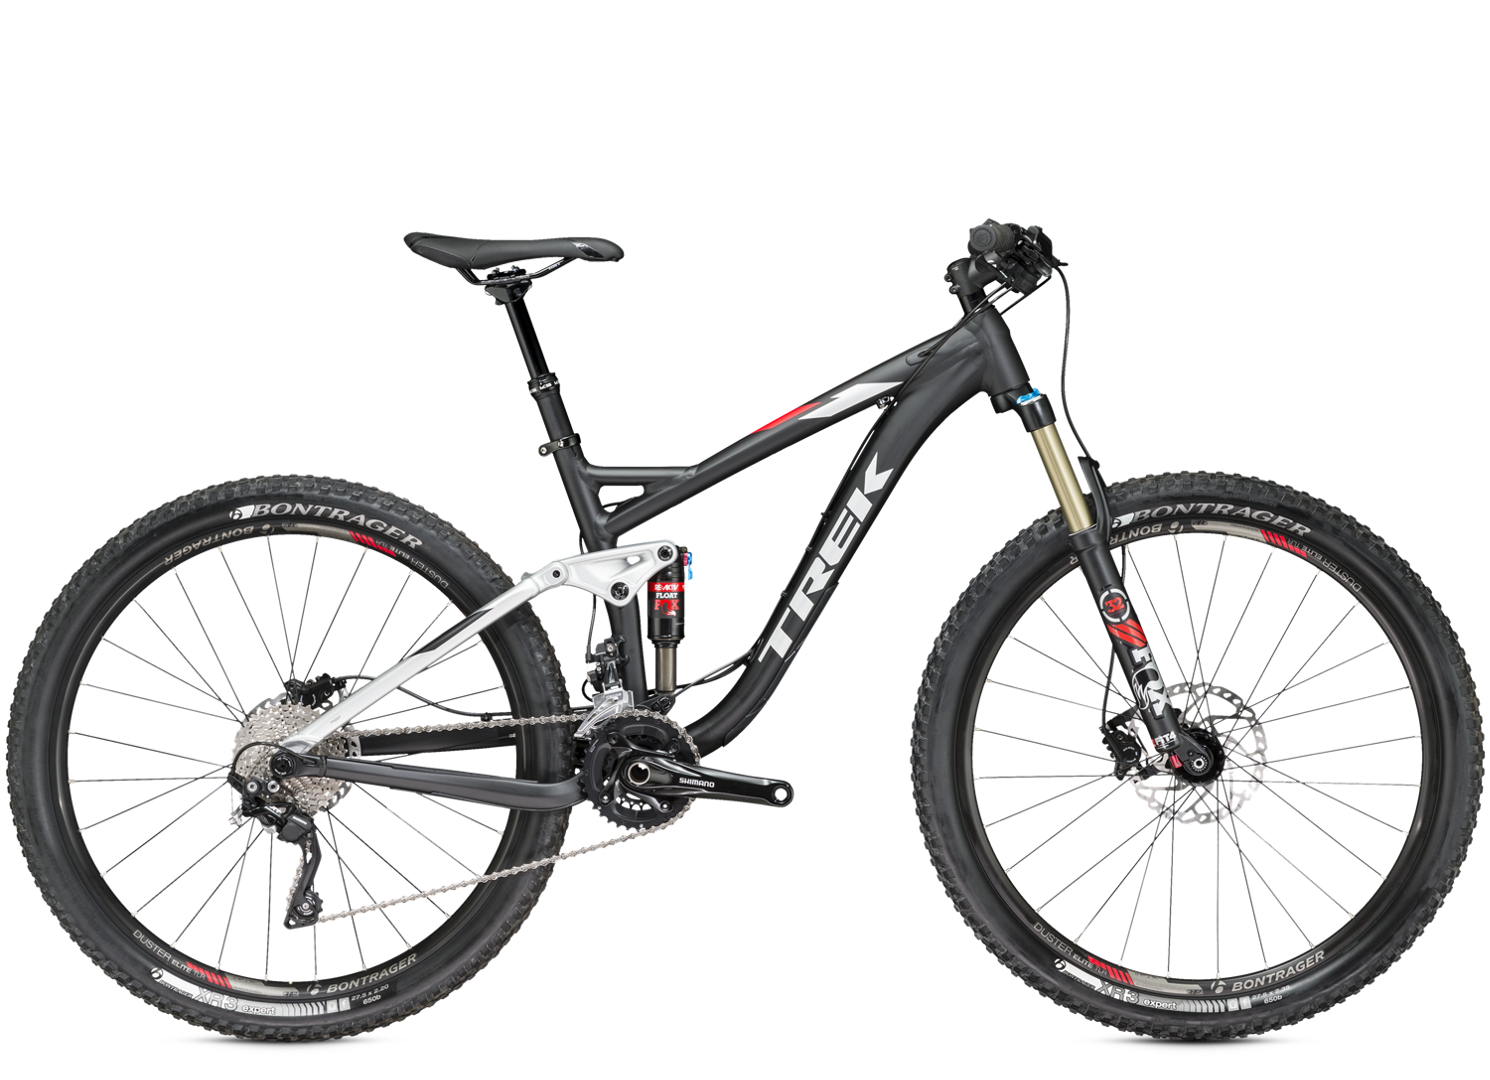 2016 Fuel Ex 8 27 5 Bike Archive Trek Bicycle